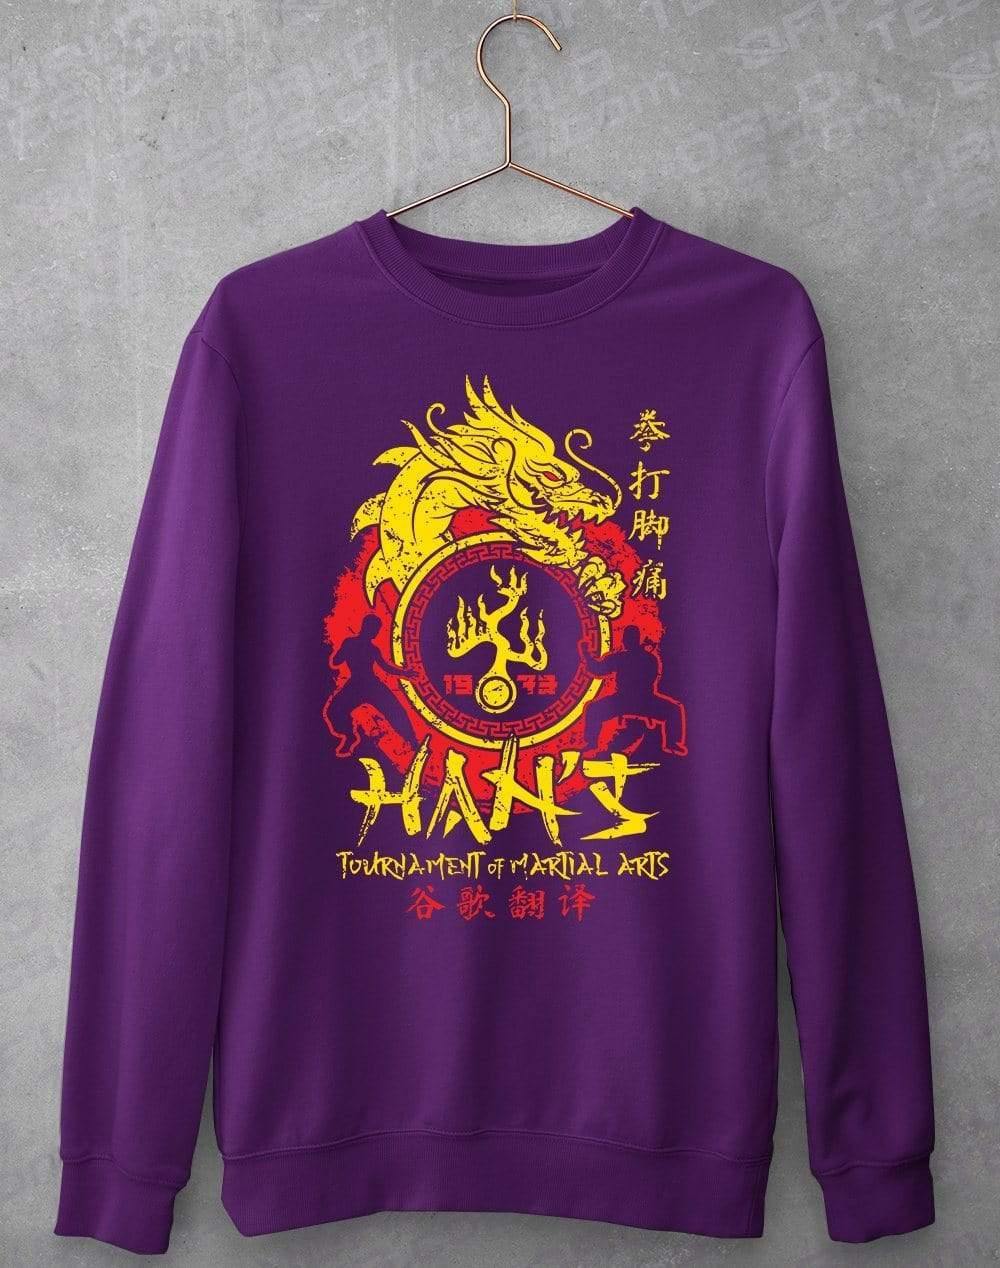 Han's Tournament of Martial Arts Sweatshirt XS / Purple  - Off World Tees